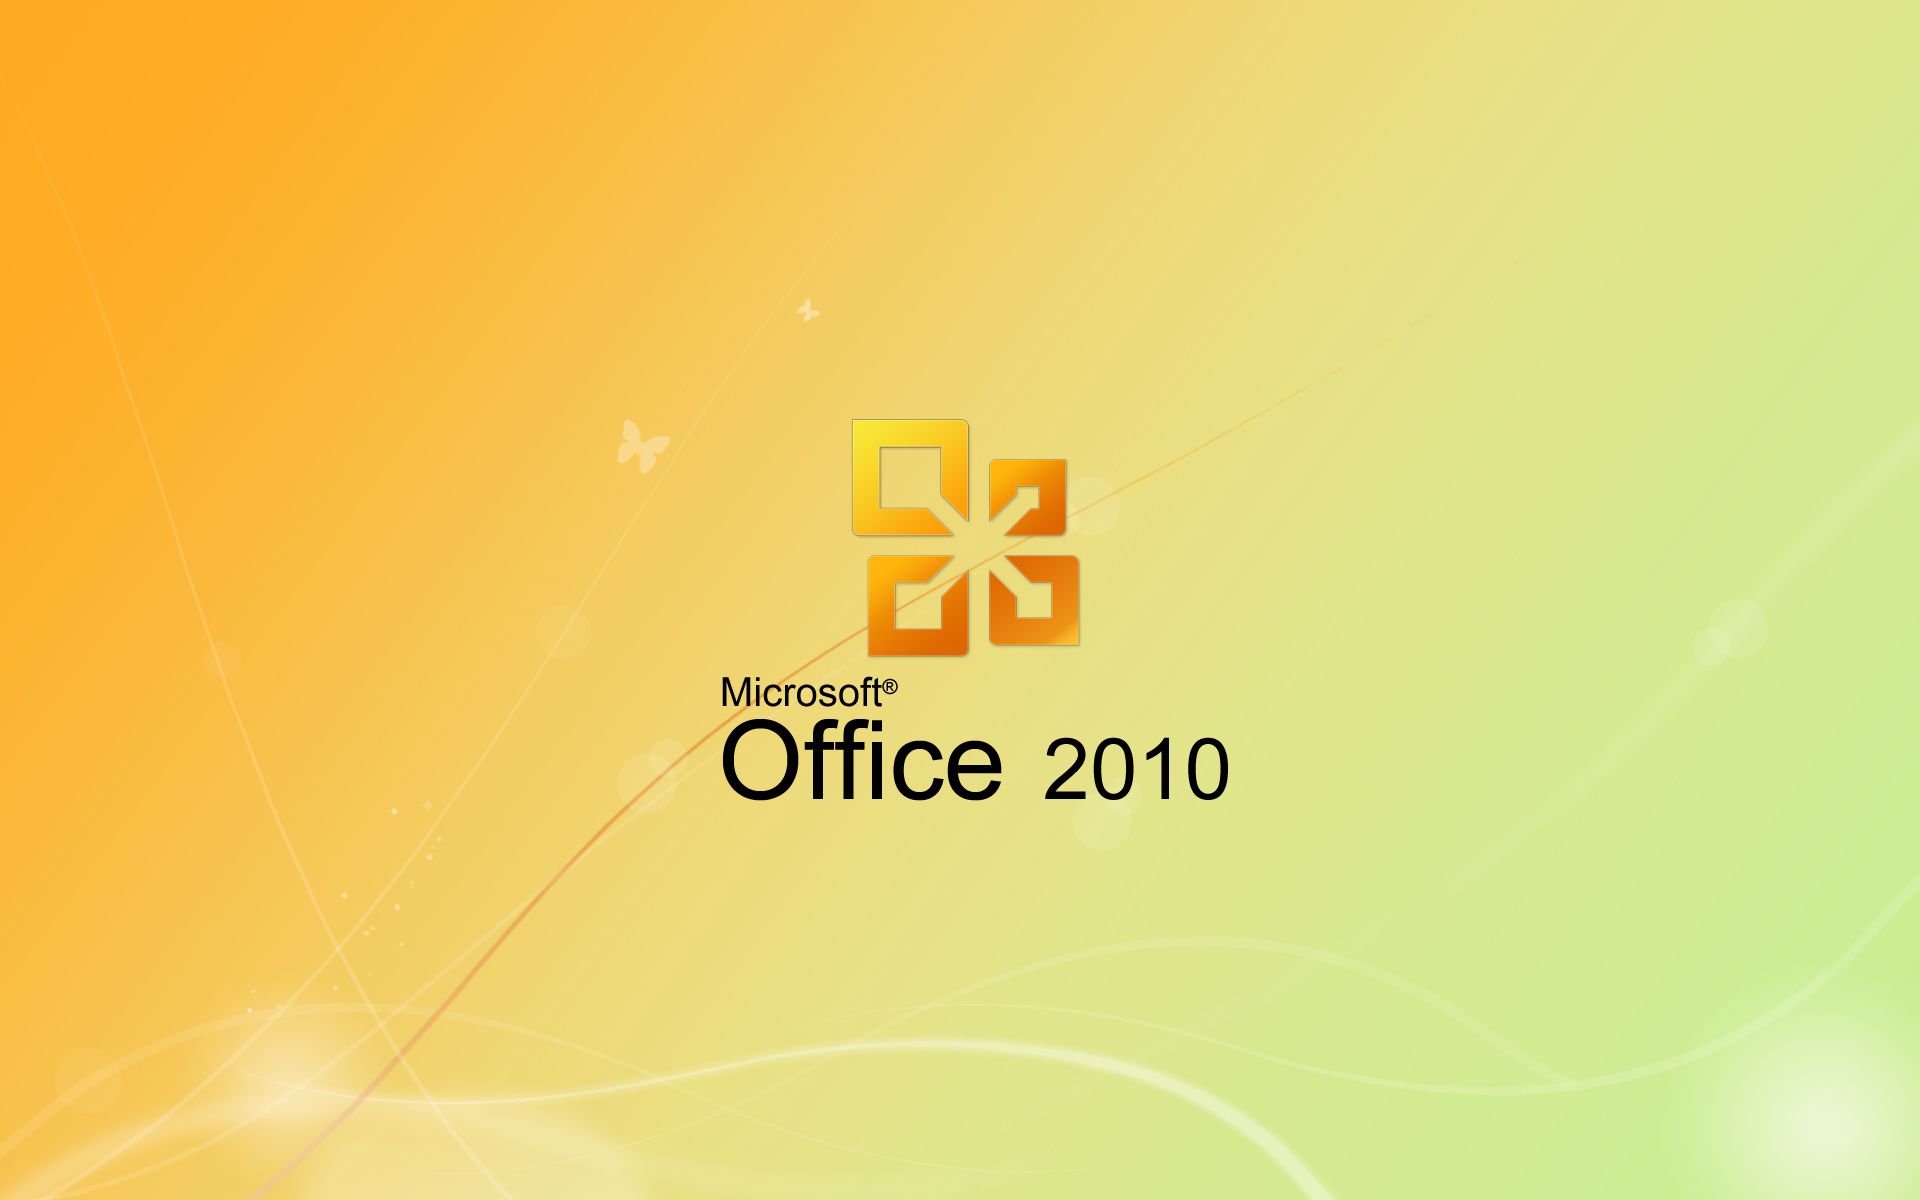 Office 2010 Background. Office Wallpaper, Fun Office Wallpaper and Clean Office Wallpaper